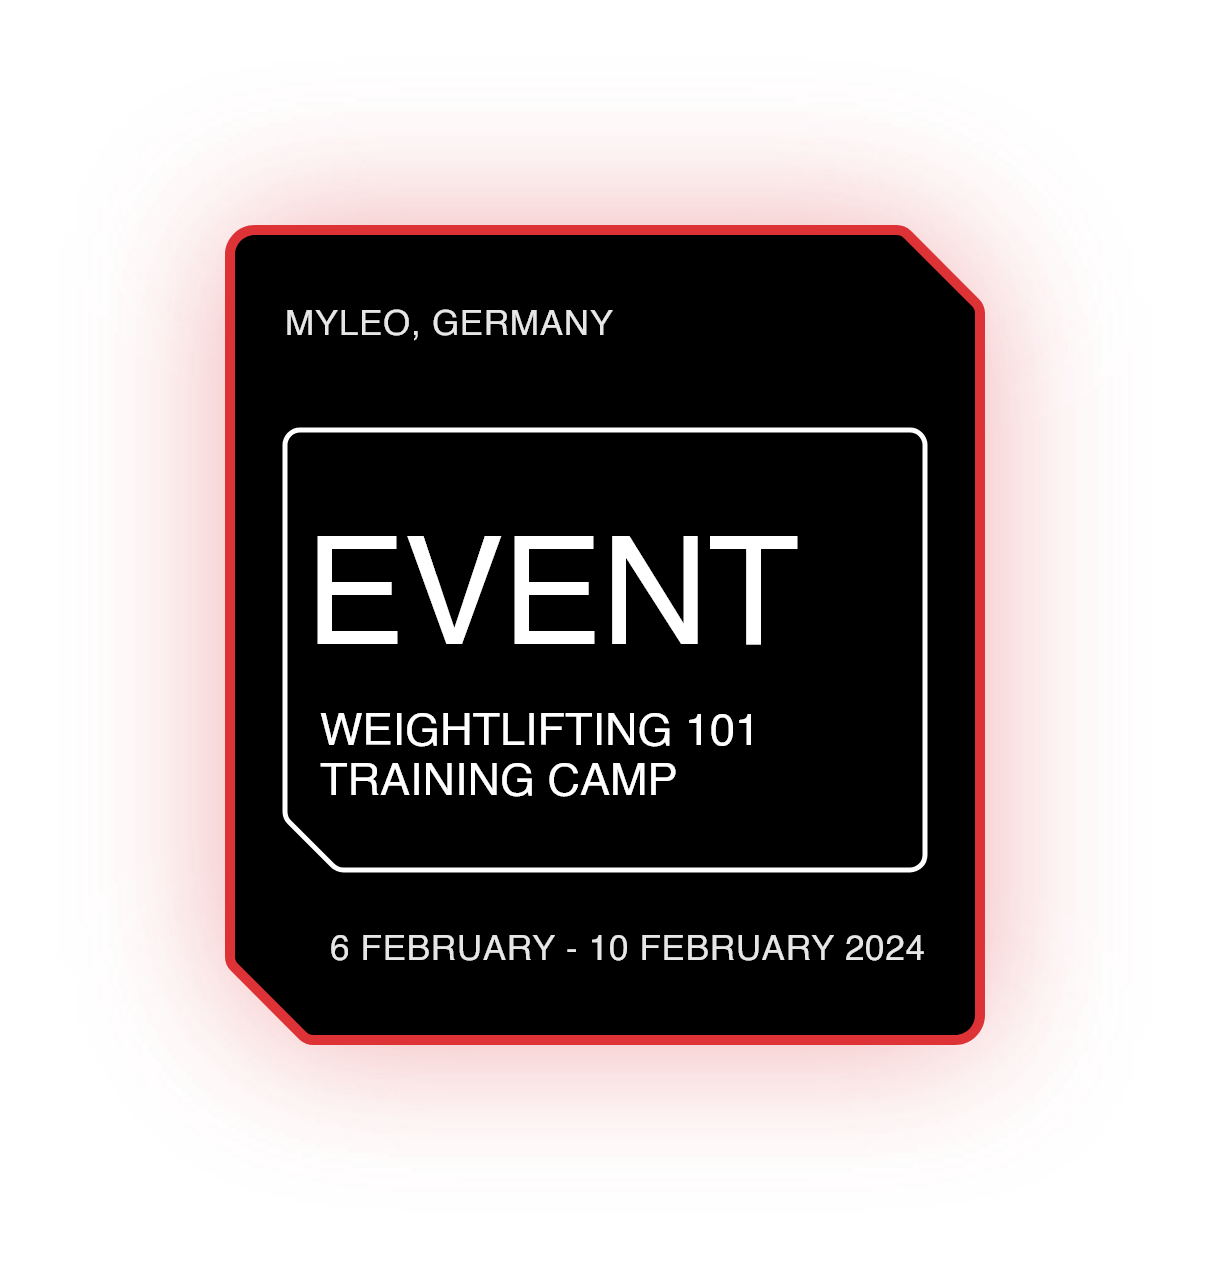 Weightlifting 101 Training Camp 2024 - Berlin, Germany